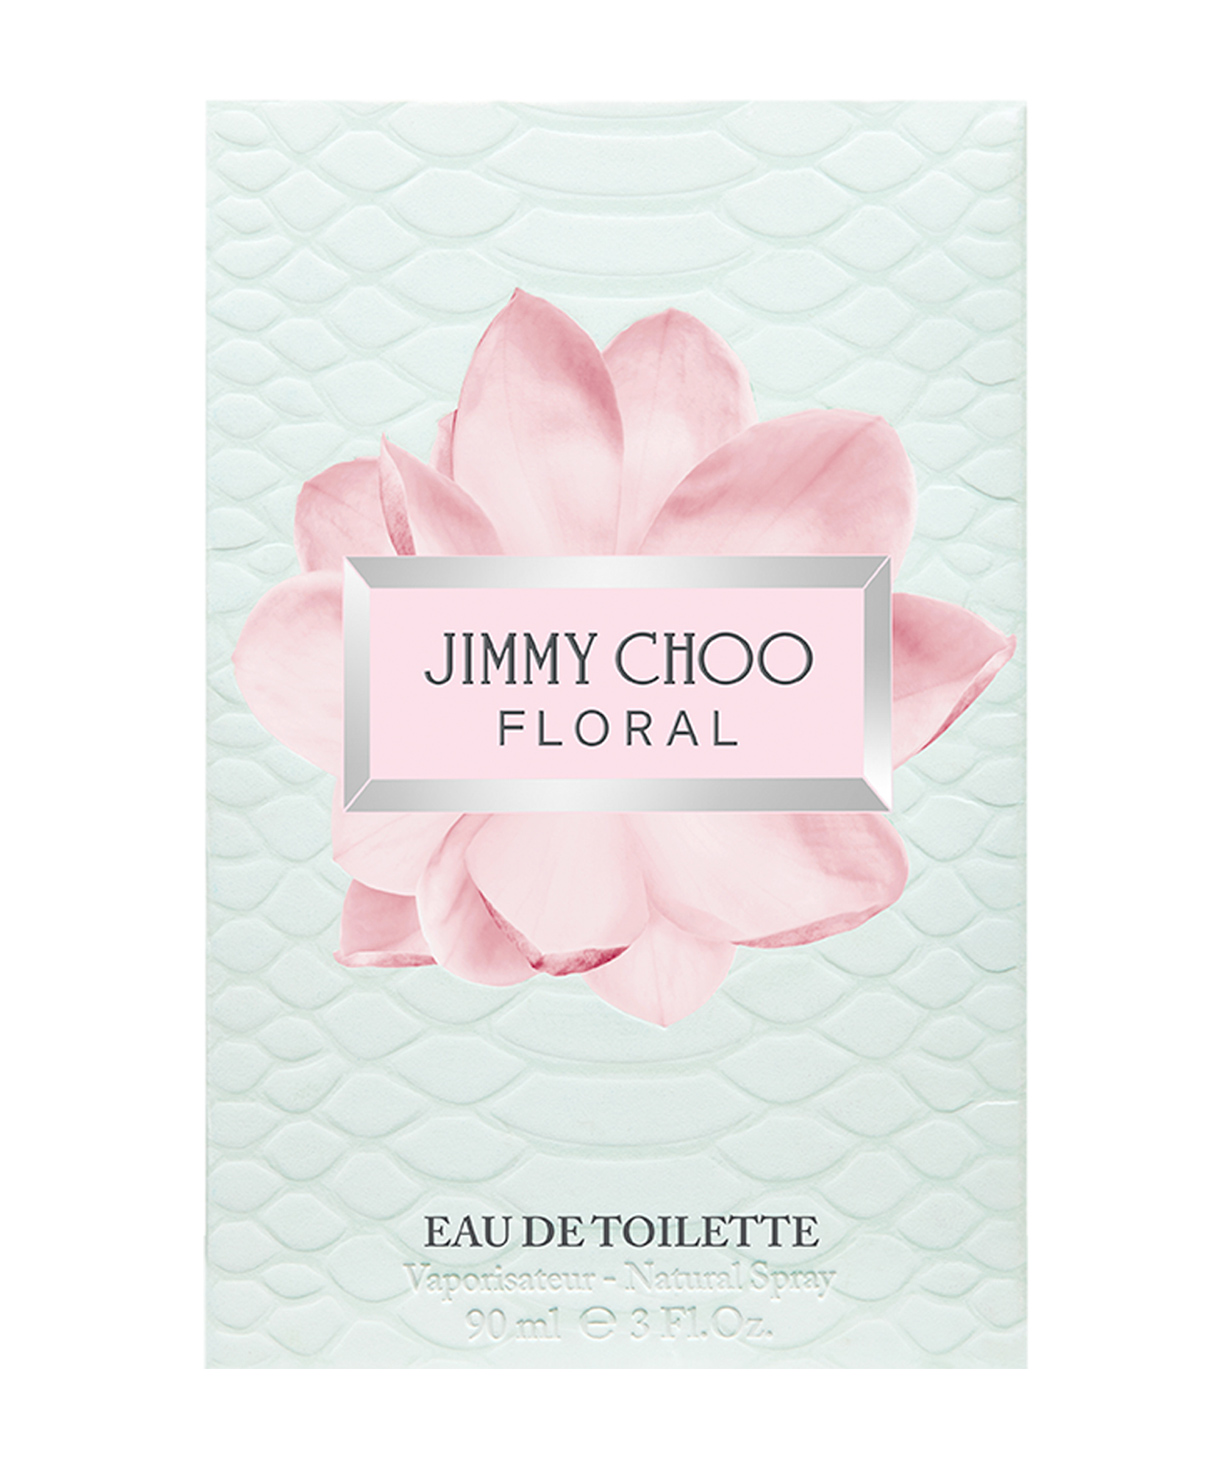 Perfume «Jimmy Choo» Floral, for women, 90 ml